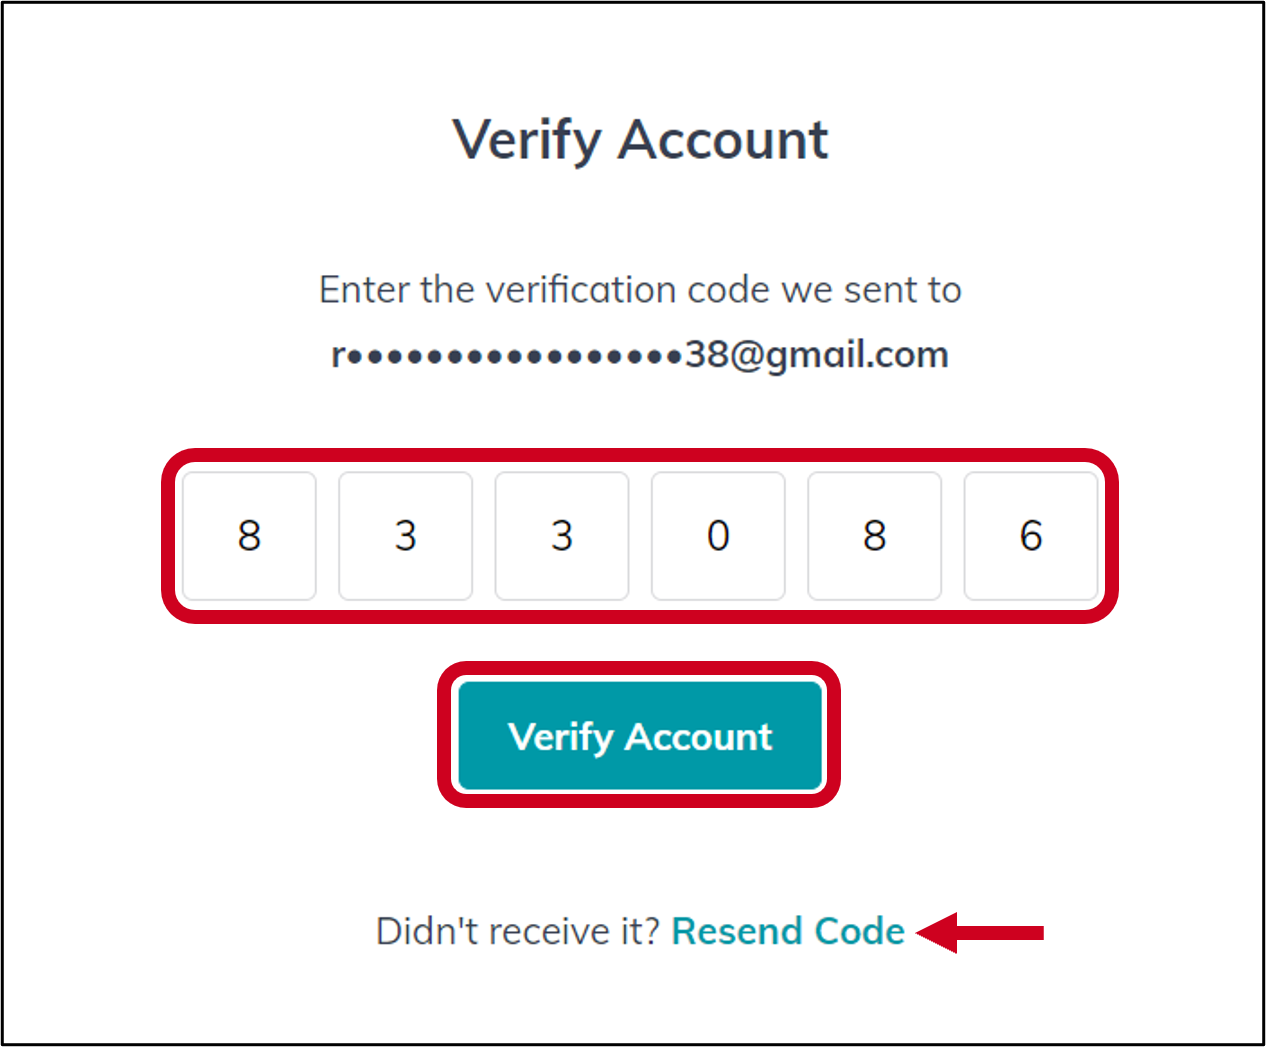 assoc_rjp_verify_account3.png